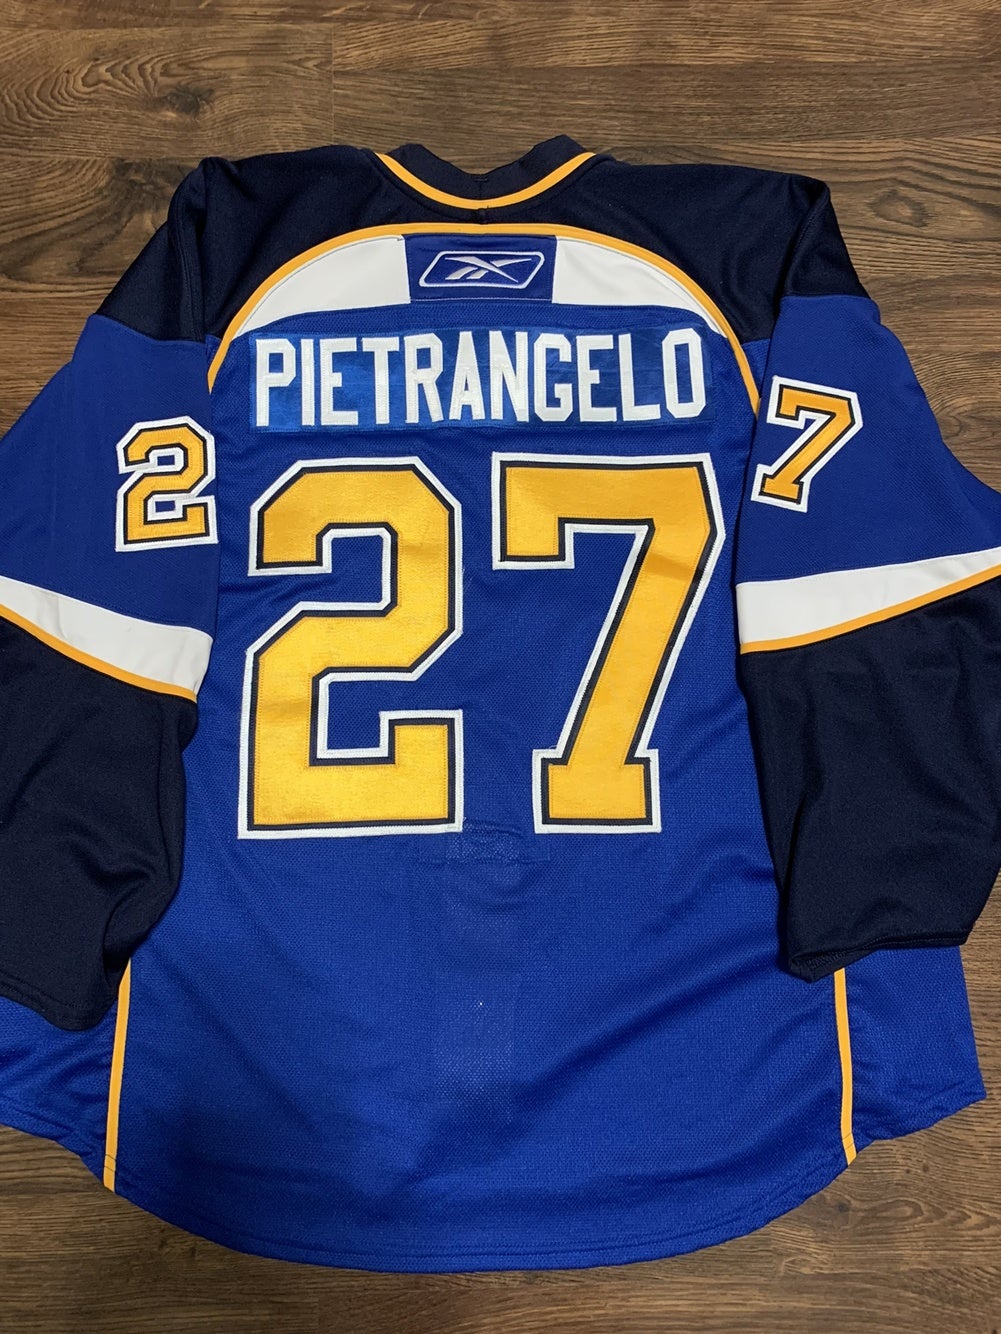 Fanatics NHL St. Louis Blues Alex Pietrangelo #27 Hockey Jersey Mens Size  XS New